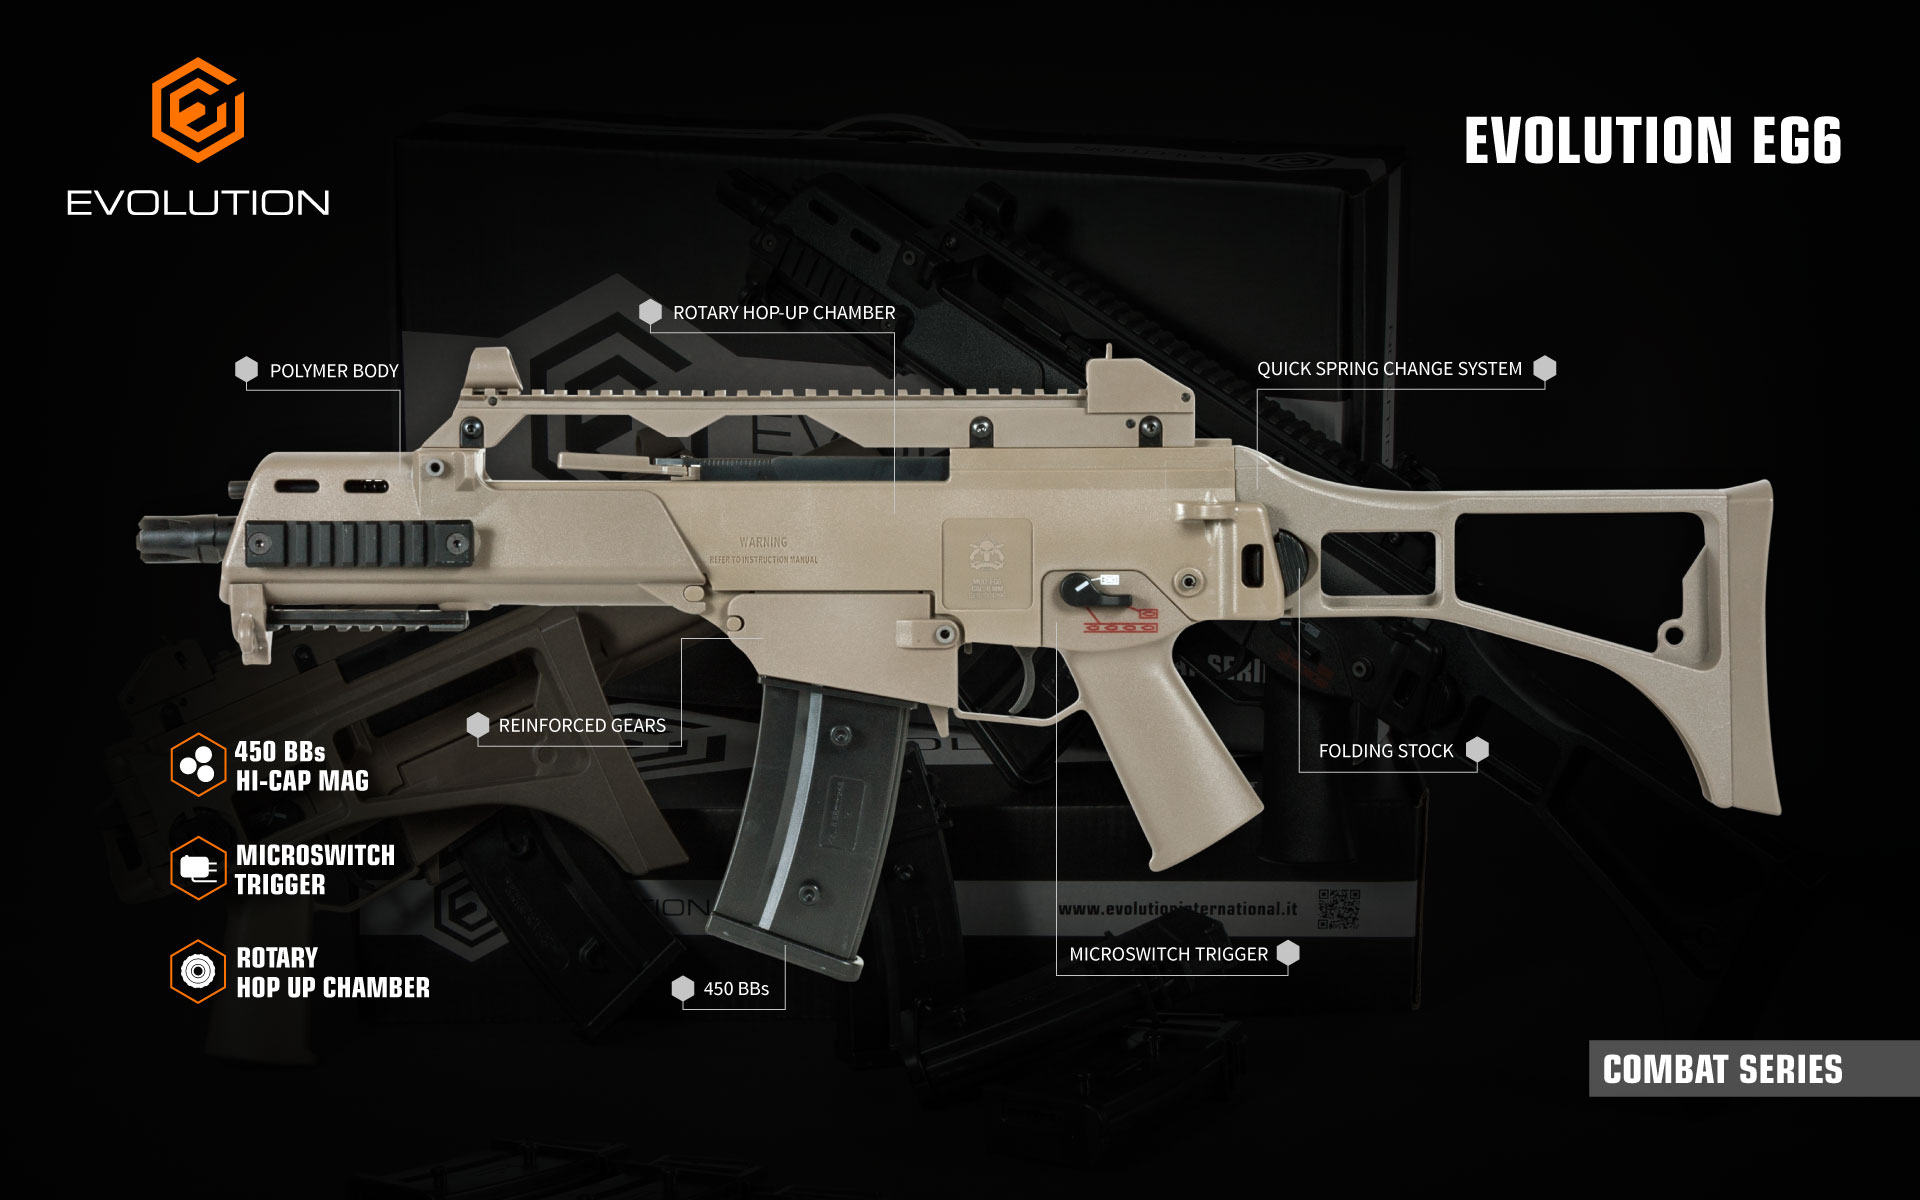 Evolution Combat Series EG6 air soft gun